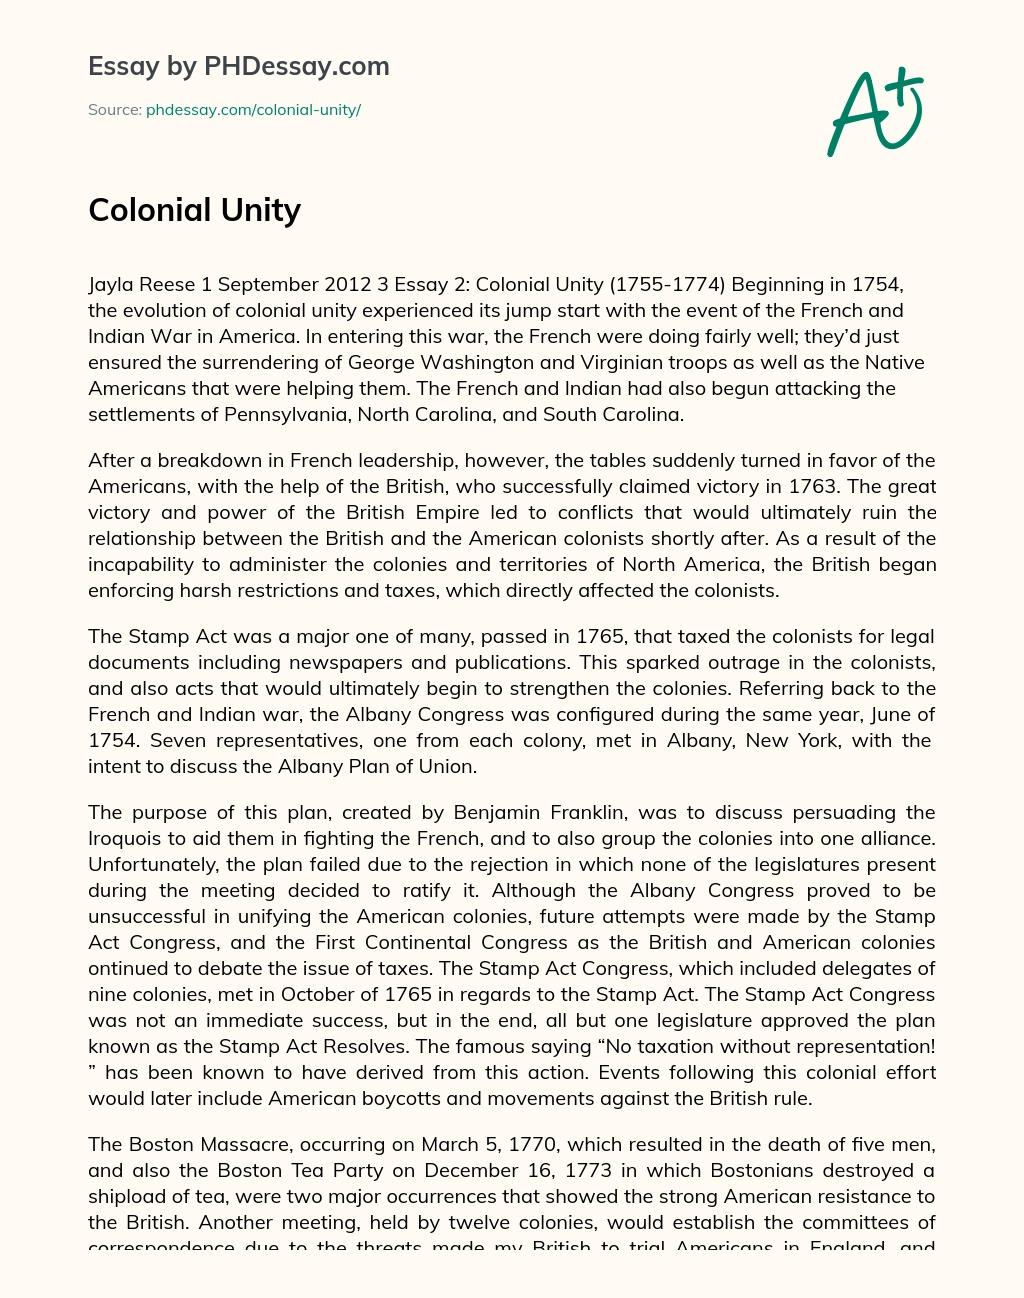 Colonial Unity essay